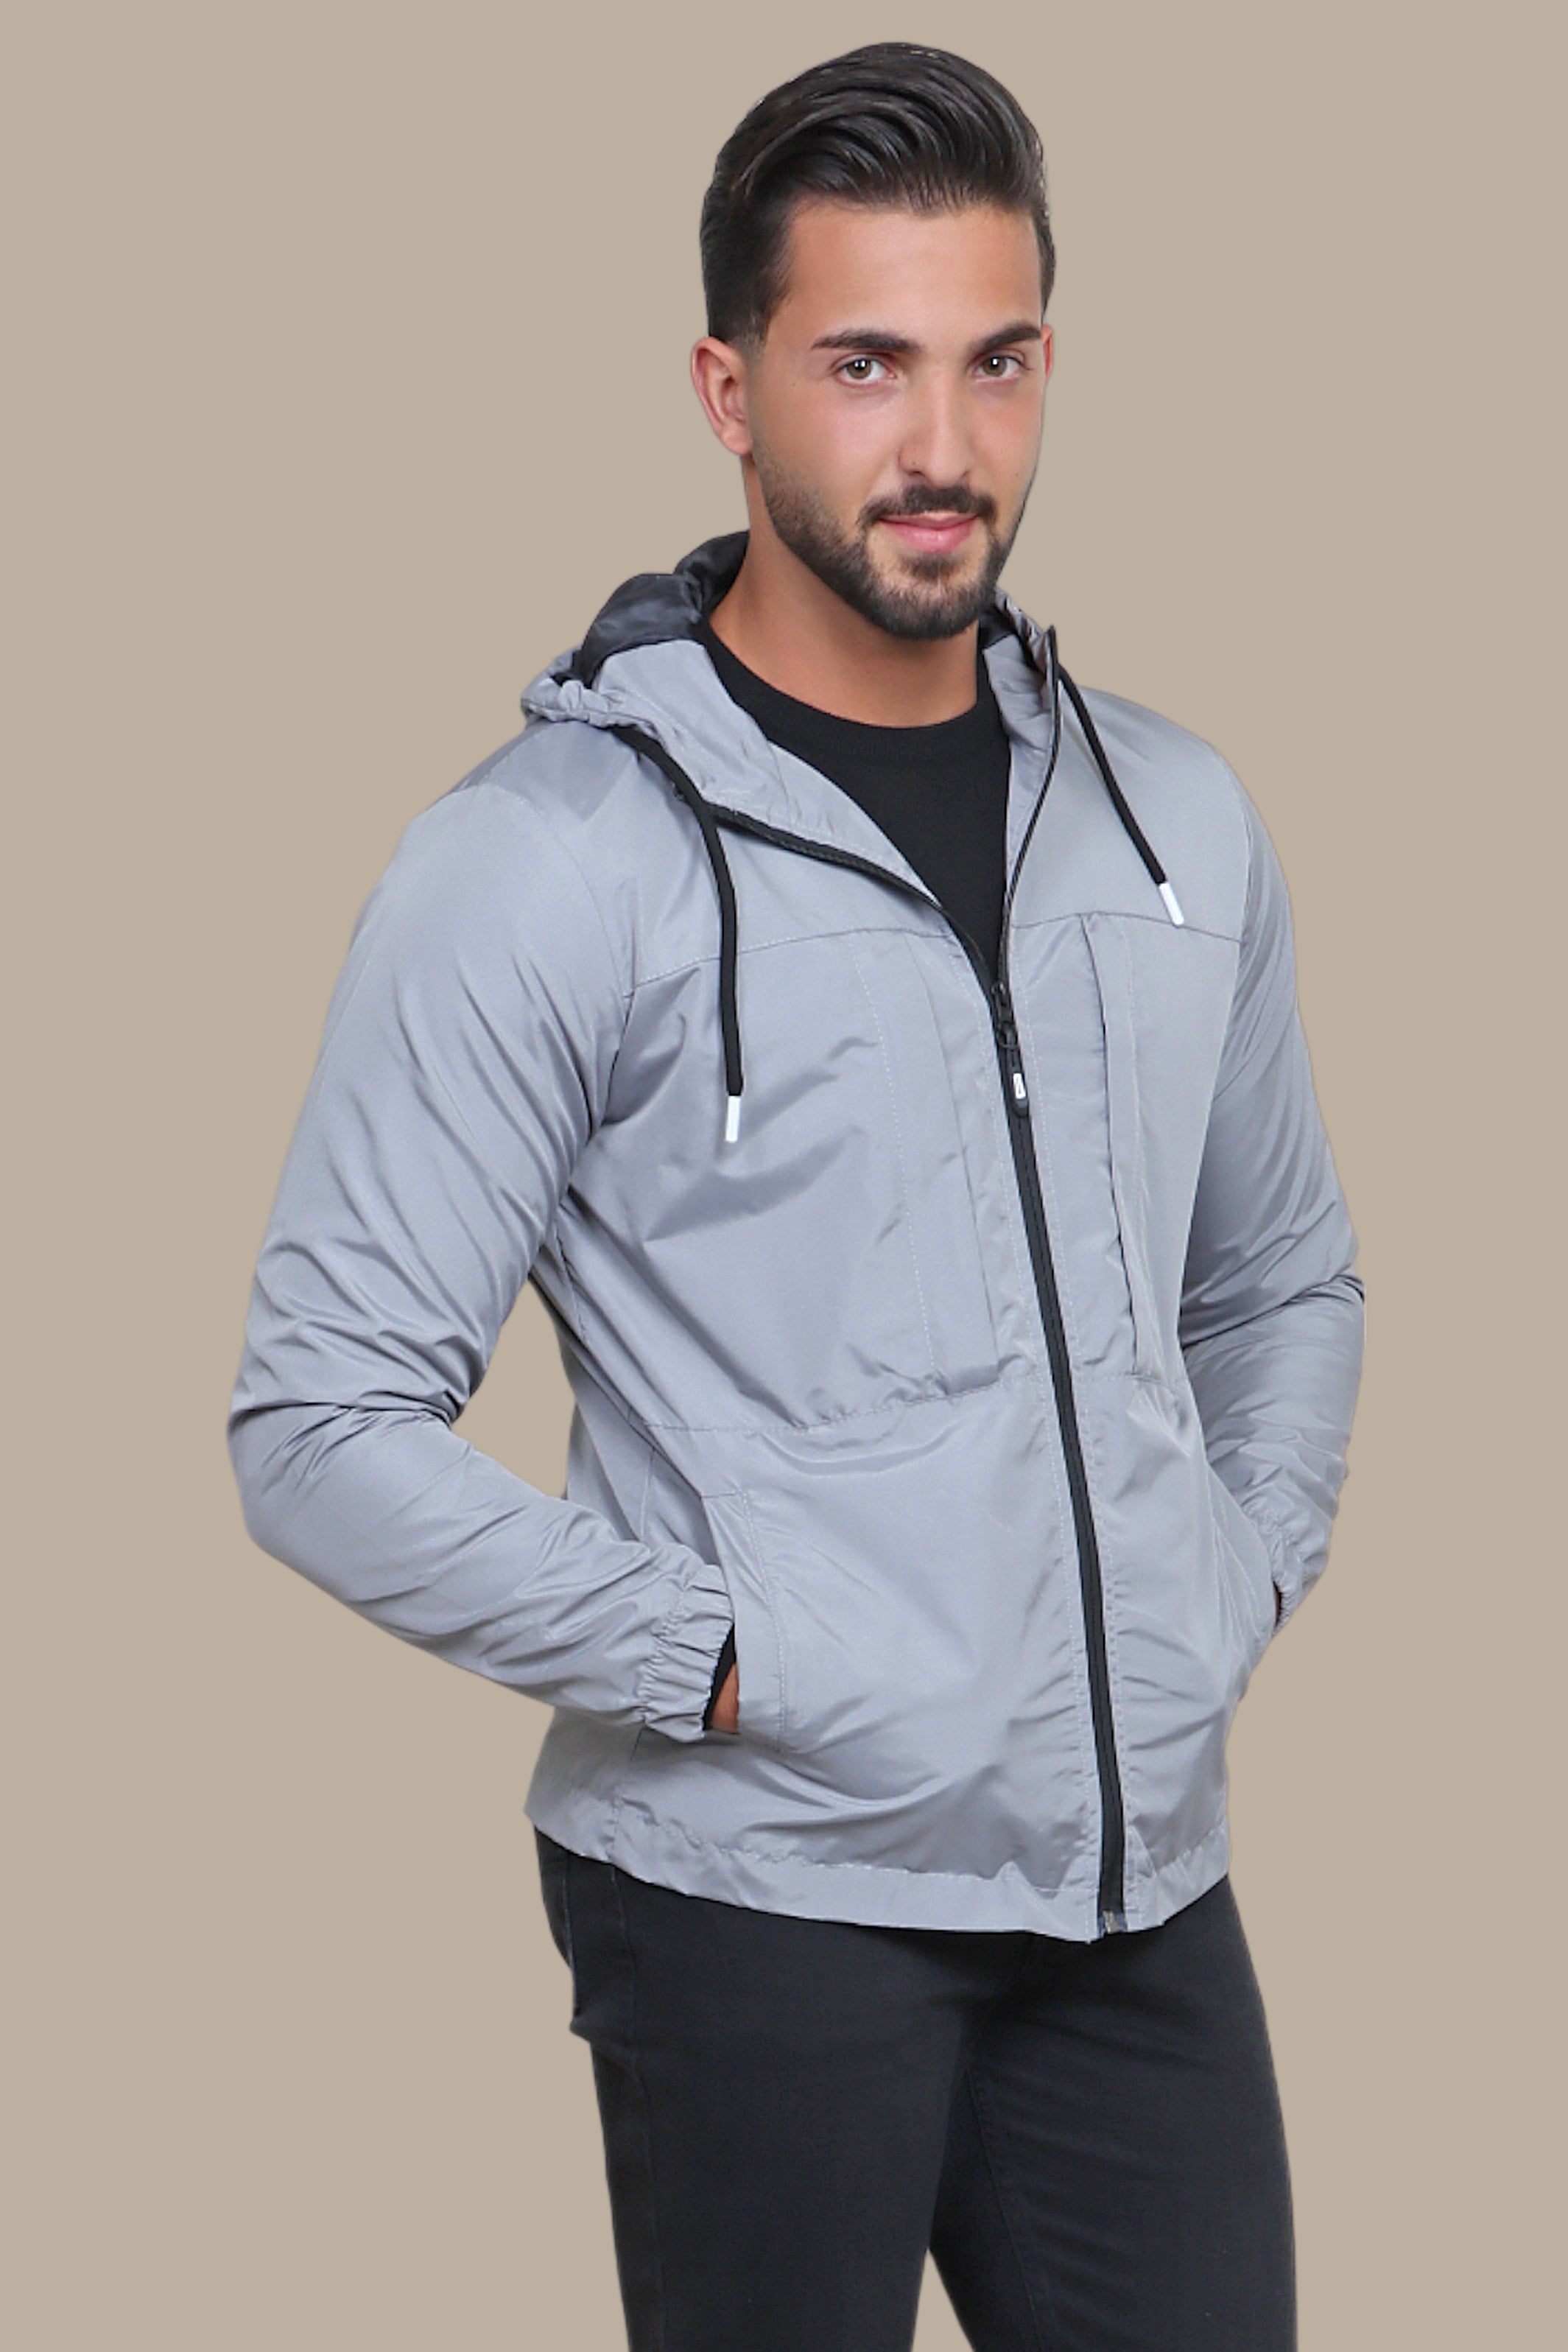 Gray Waterproof Hooded Jacket: Stay Dry in Style